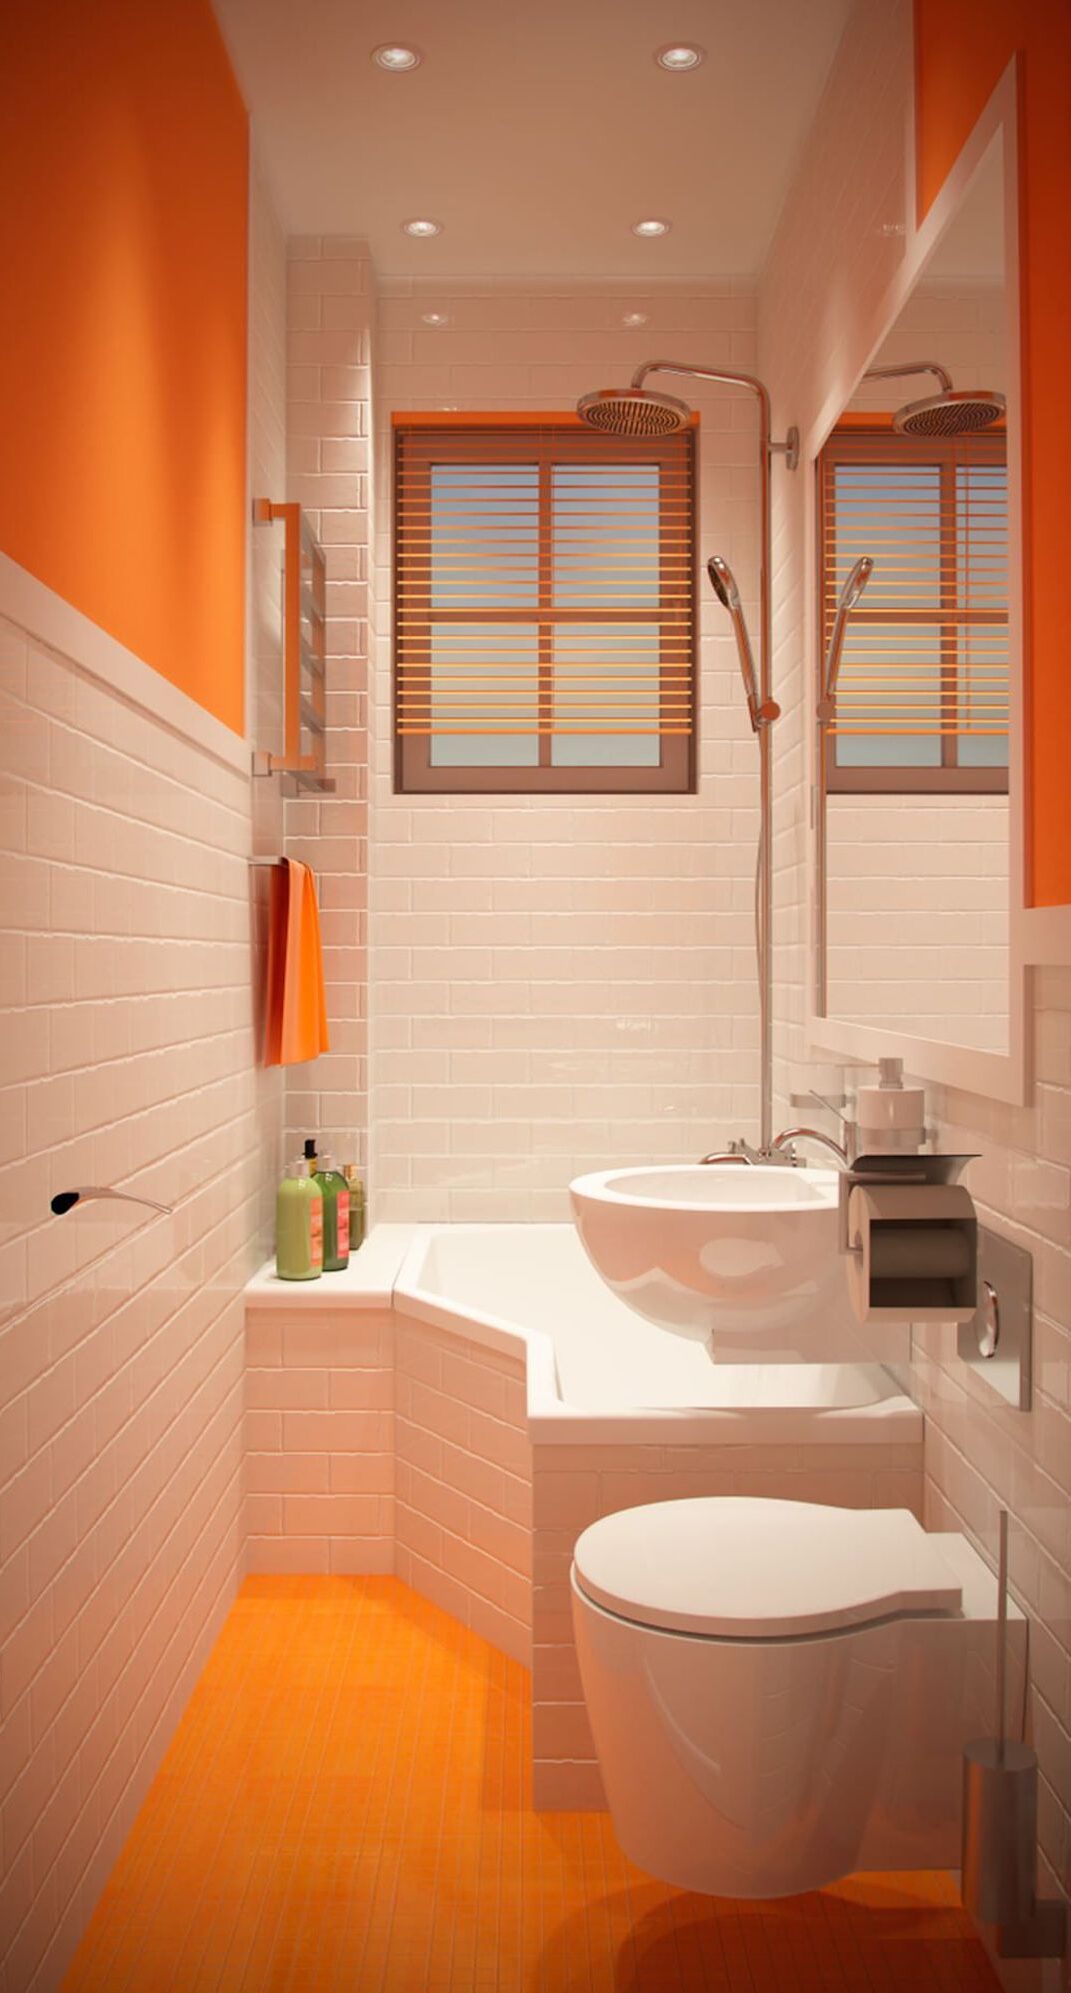 salle de bain orange mur carrelage blanc miroir rectangle spot lumineux